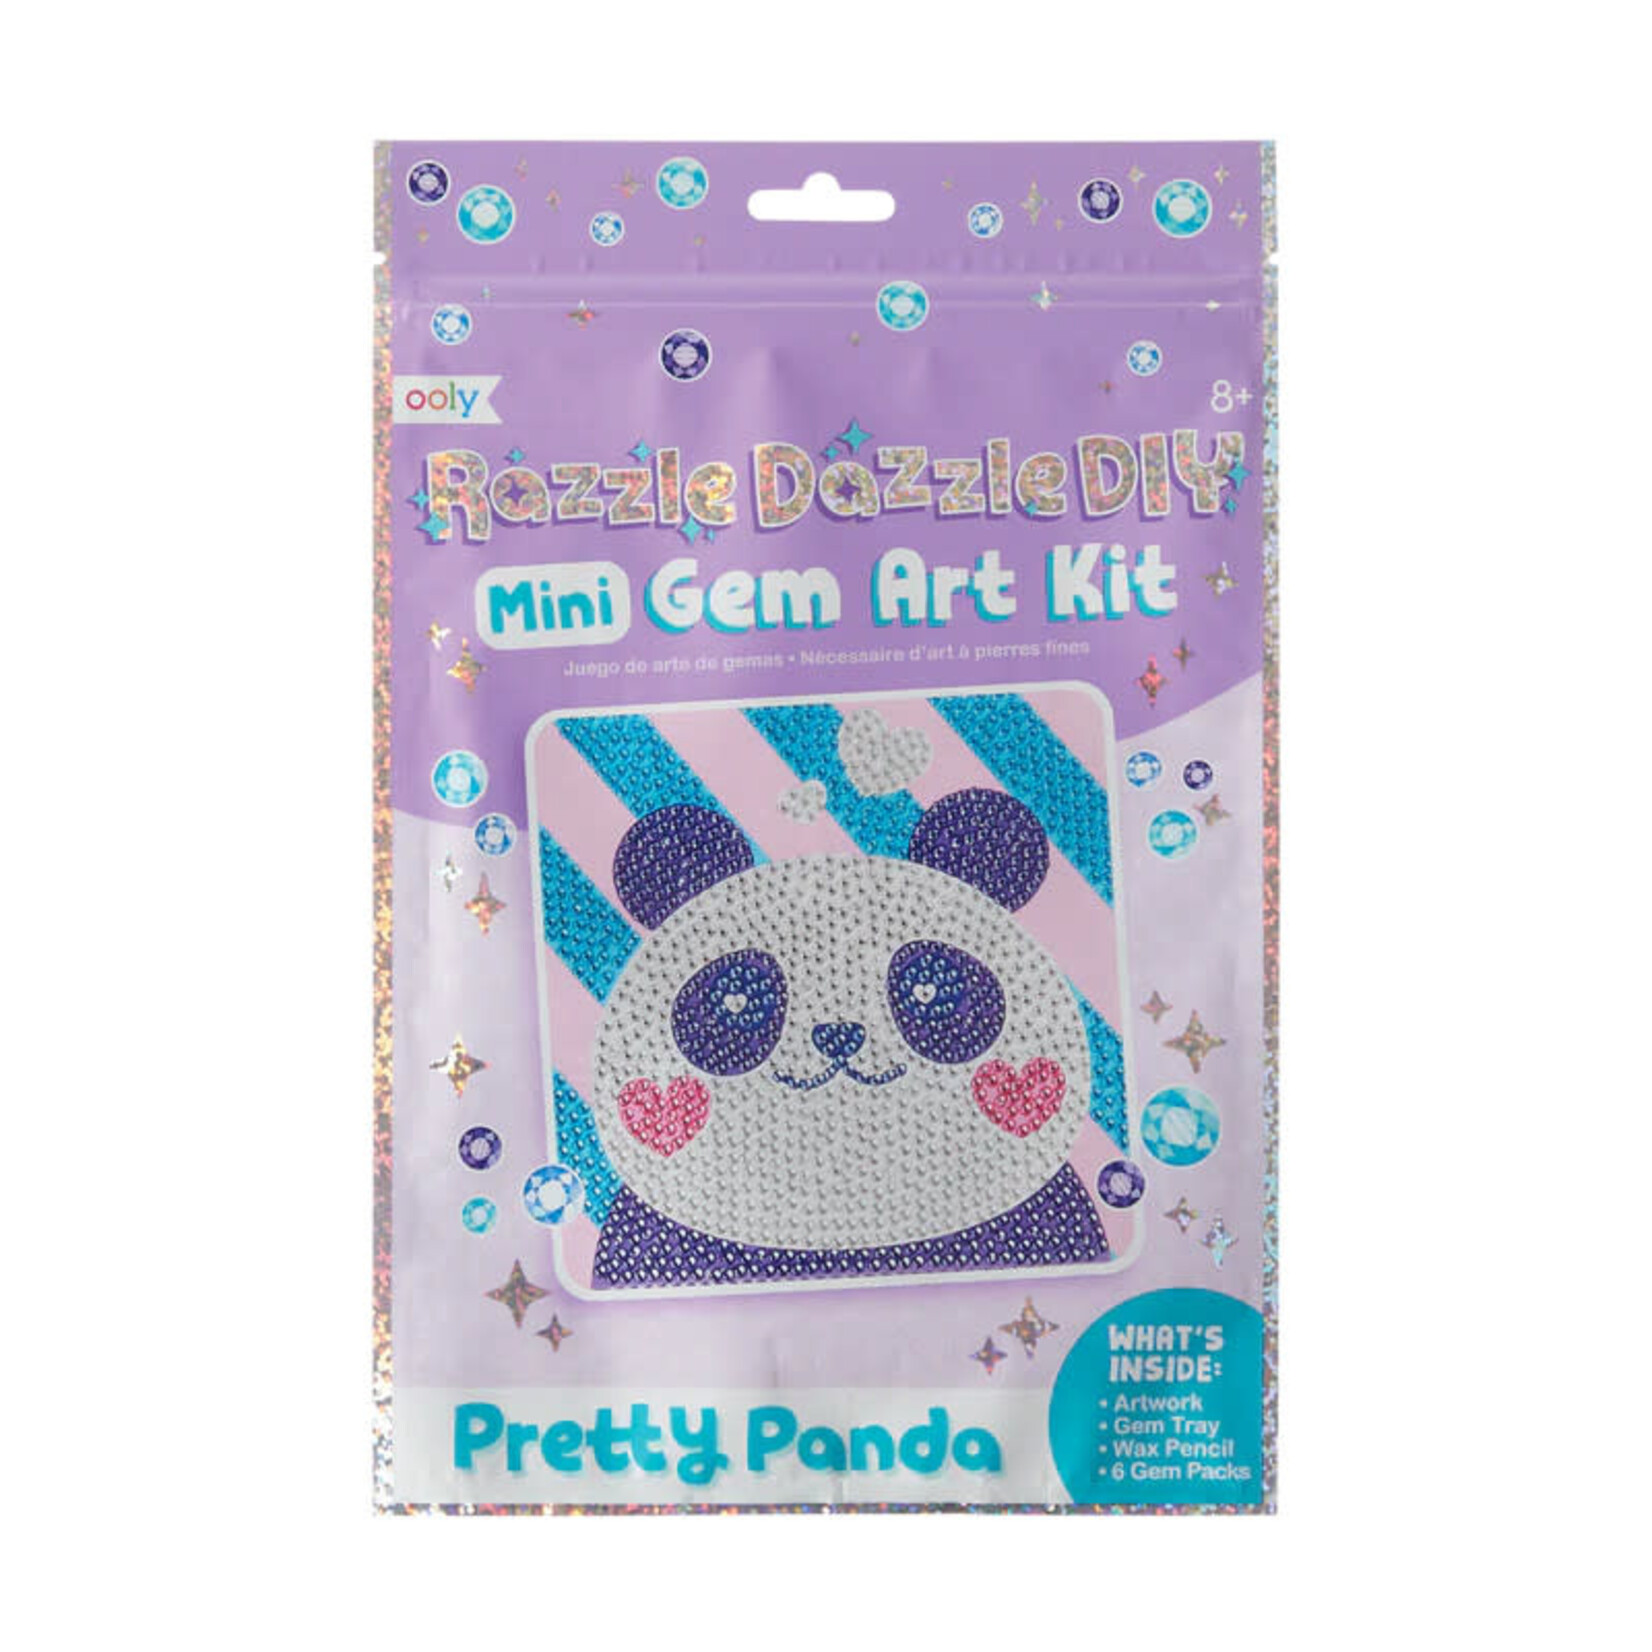 Ooly Pretty Panda Razzle Dazzle Mini Gem Art Kit